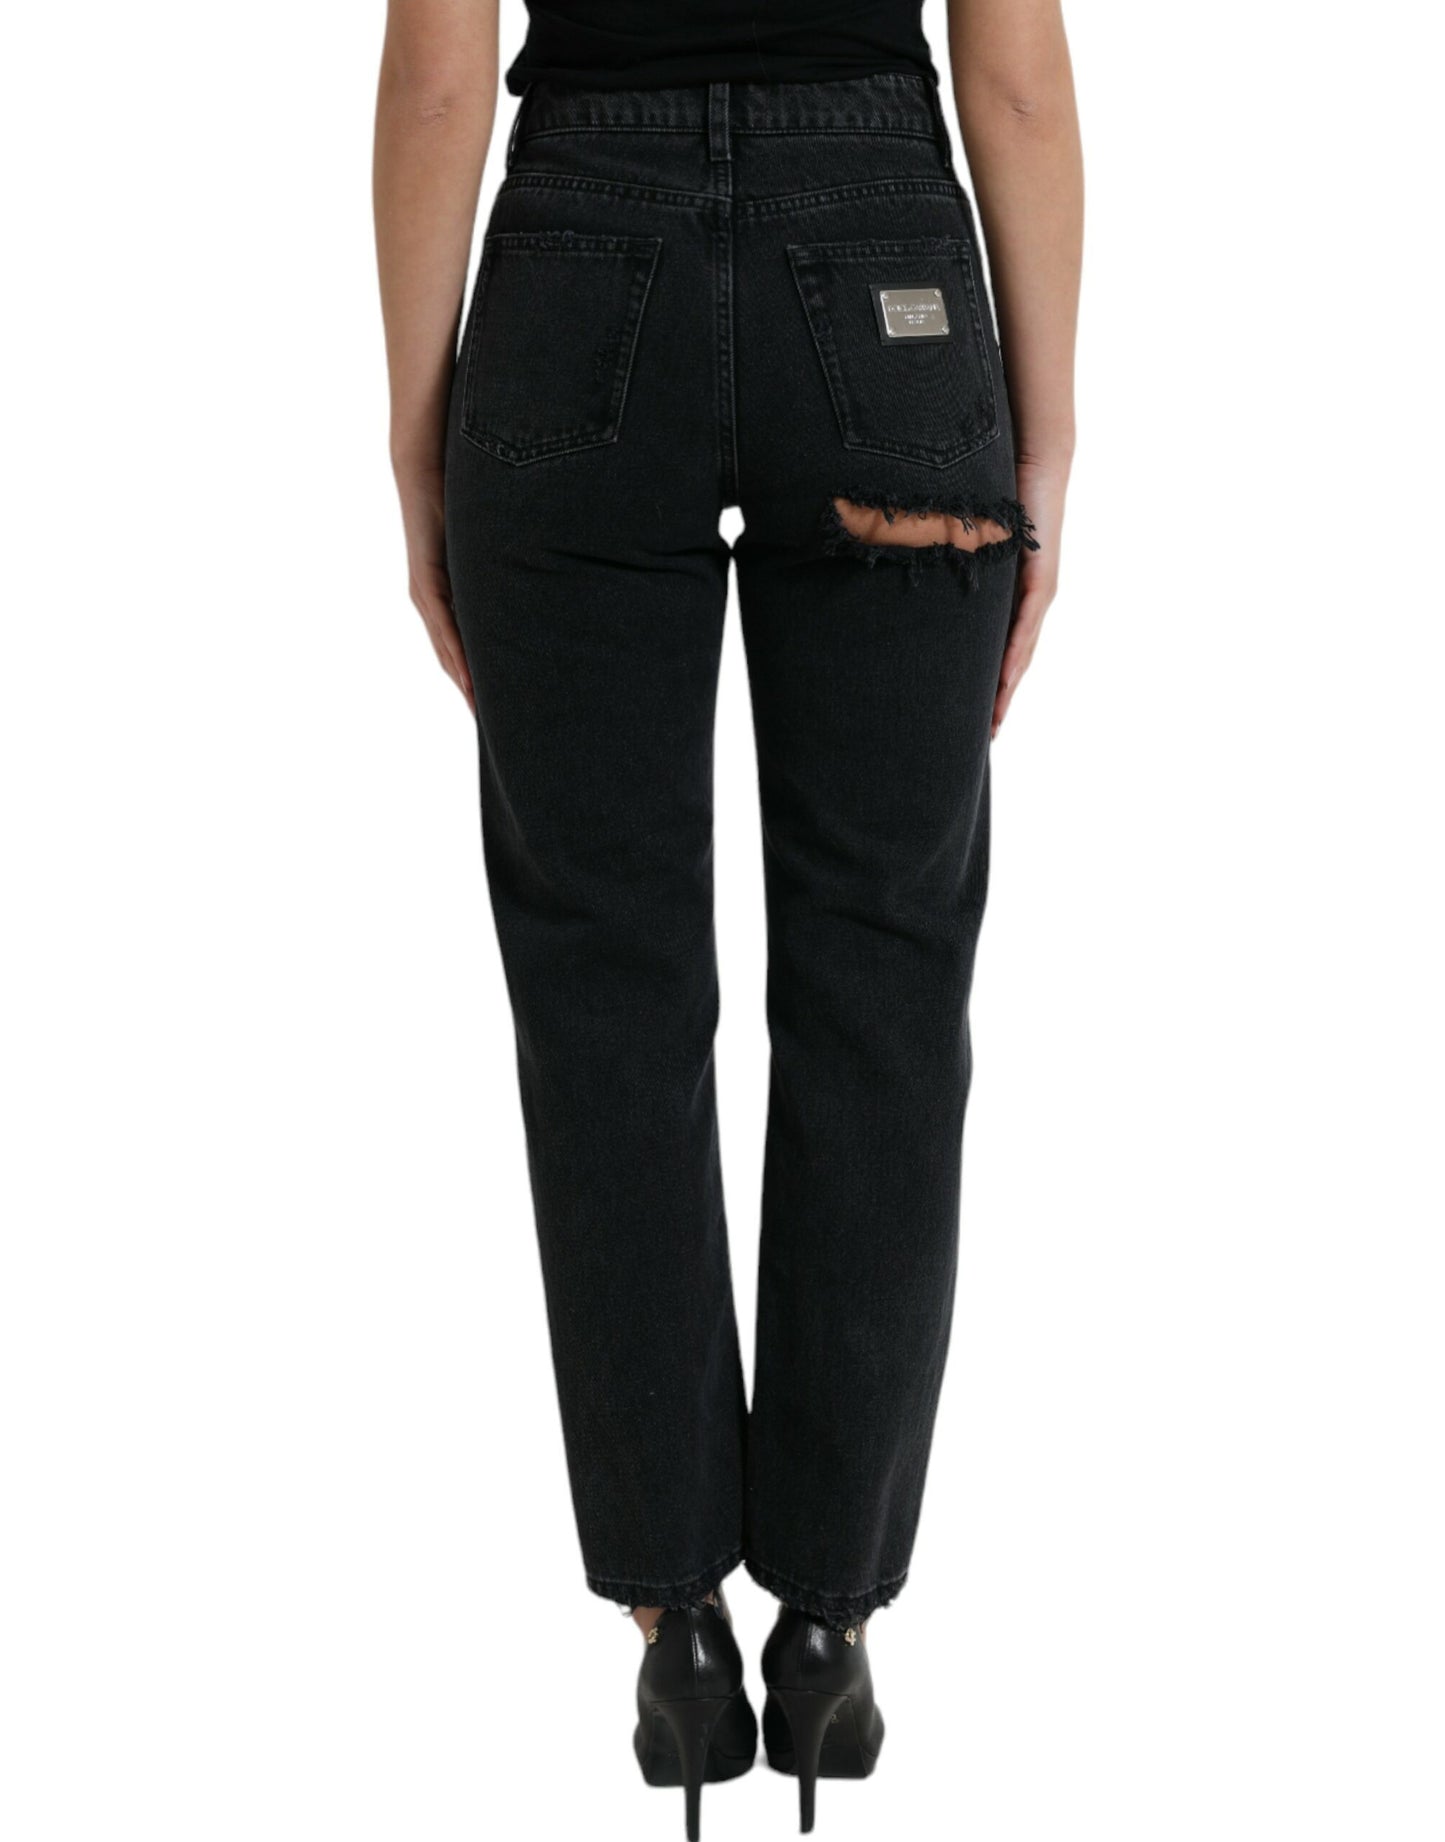 Elegant High-Waist Black Stretch Jeans